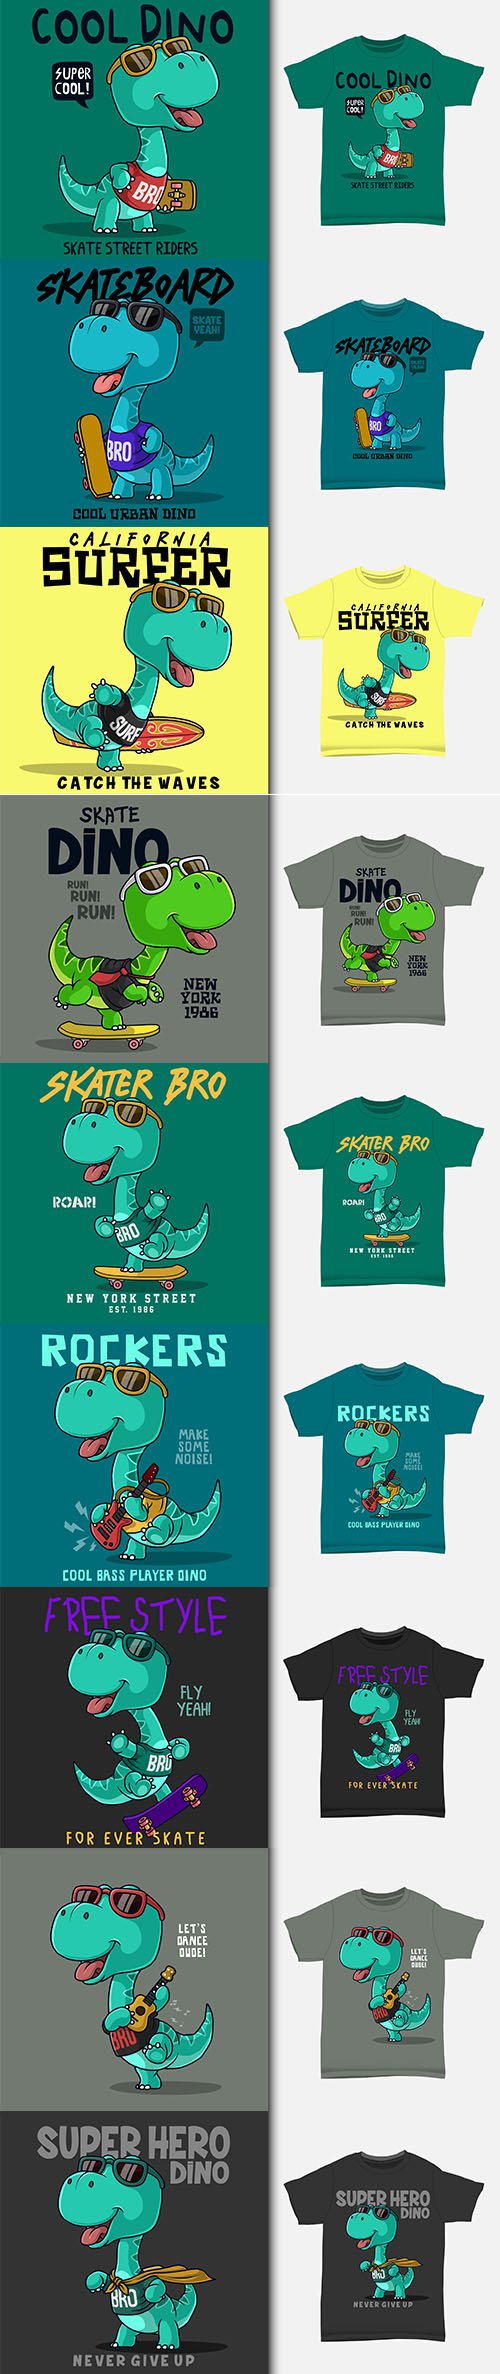 Dinosaur super hero cartoon t-shirt design